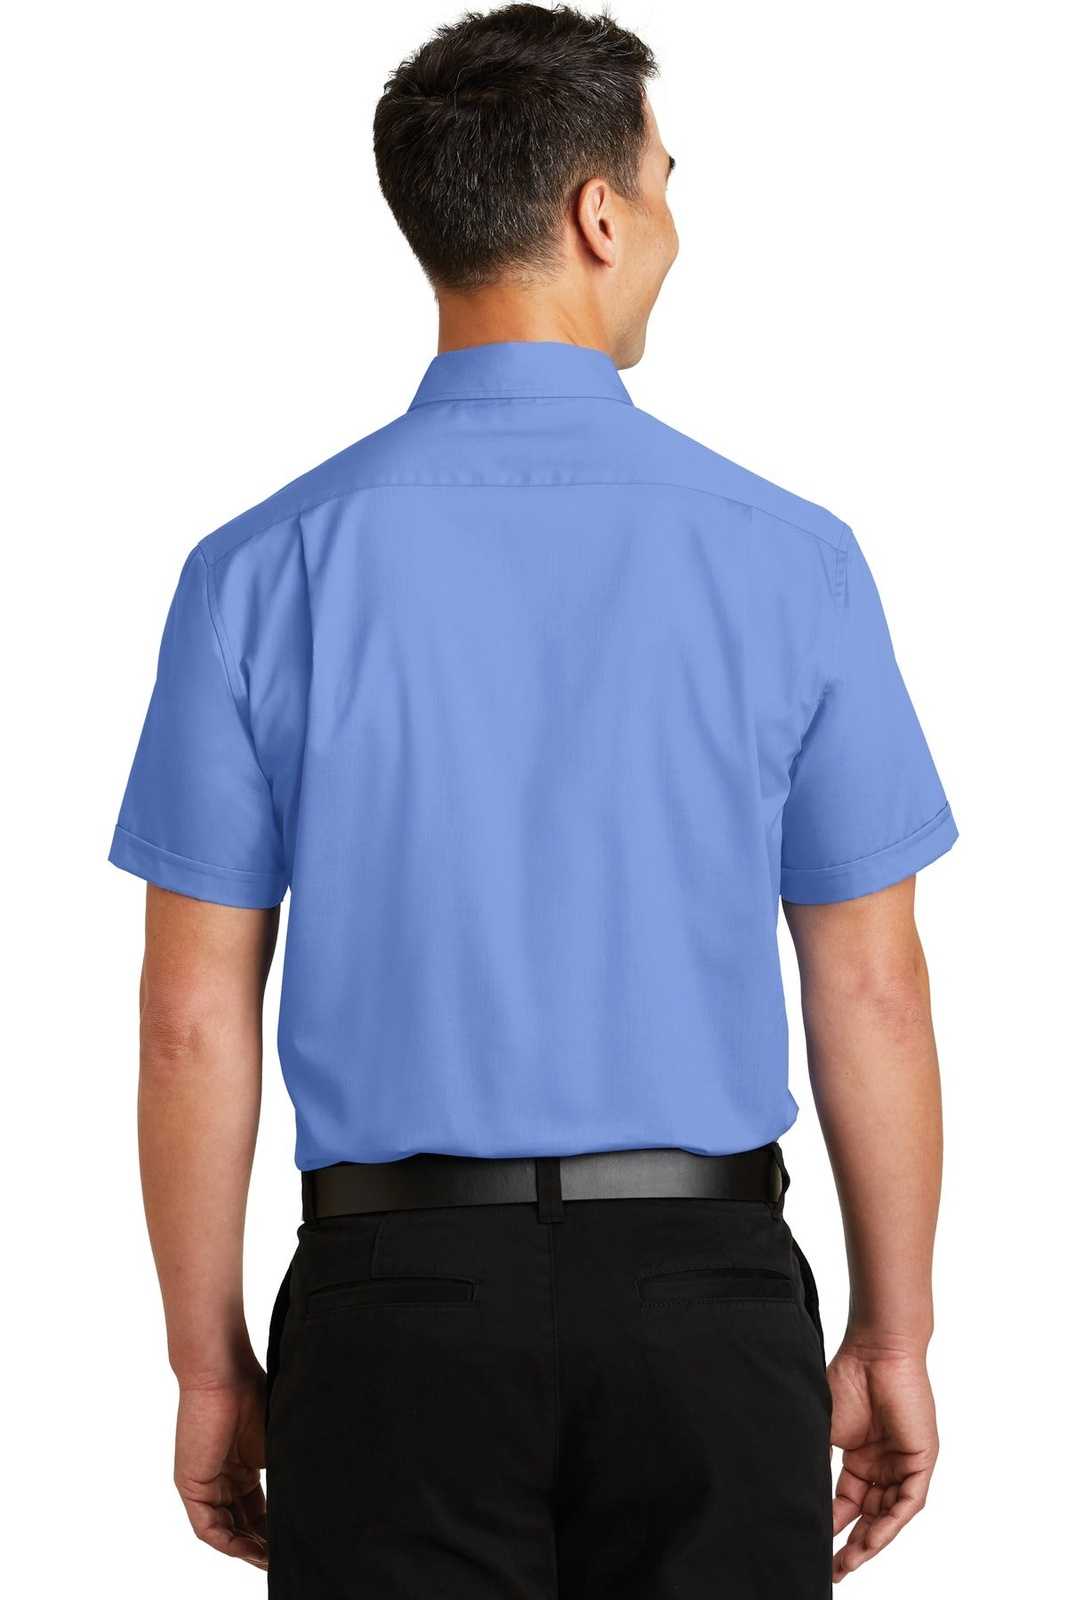 Port Authority S664 Short Sleeve Superpro Twill Shirt - Ultramarine Blue - HIT a Double - 1